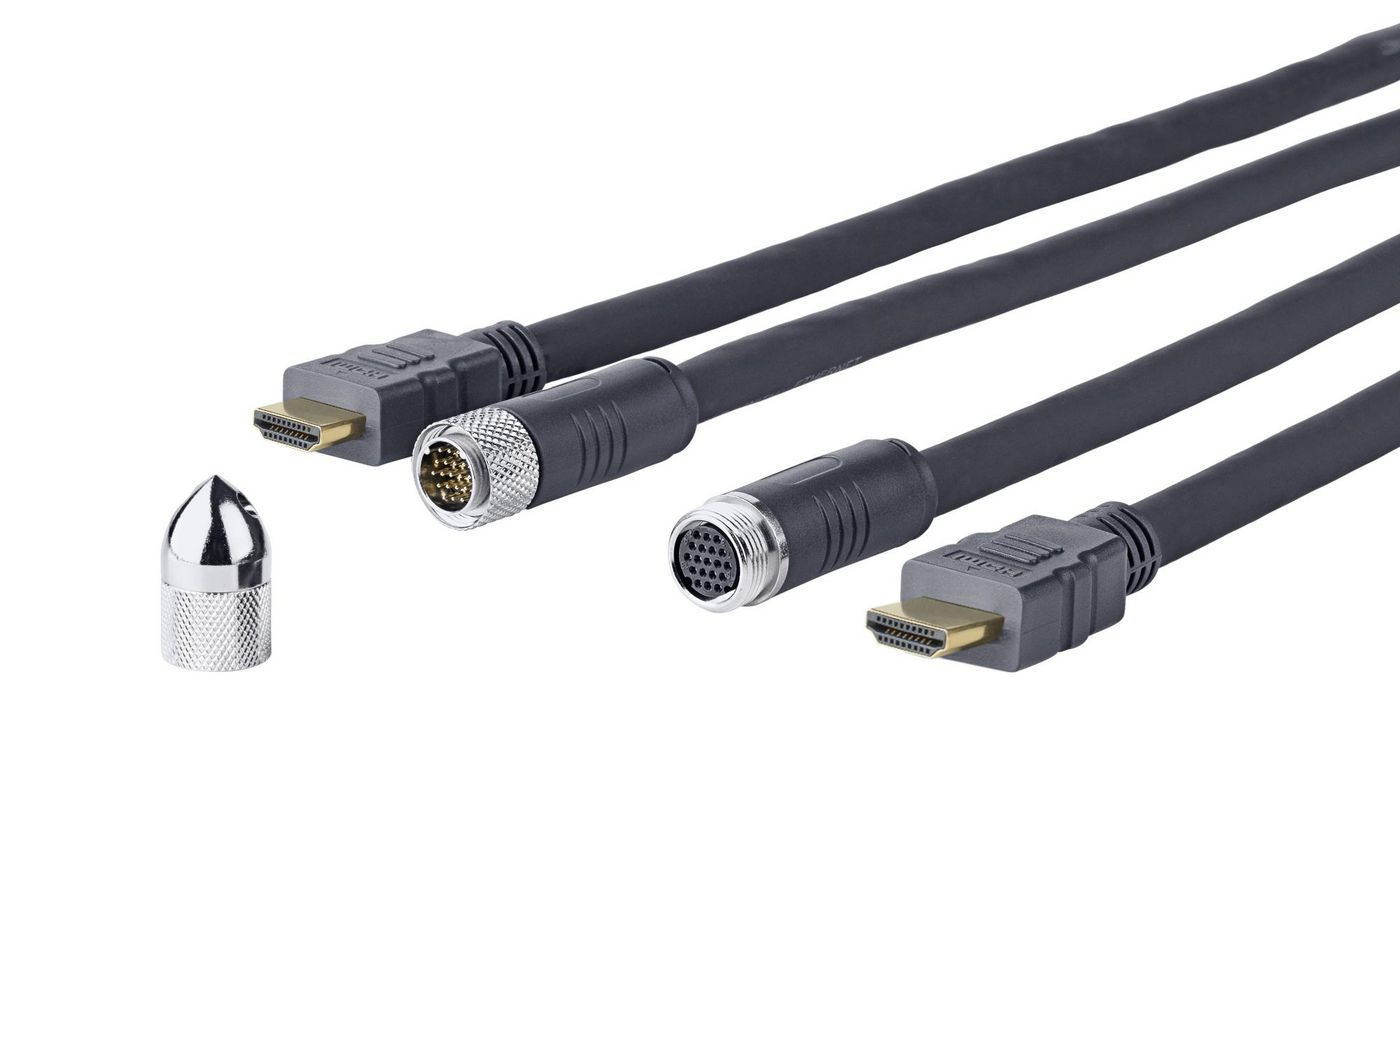 Aas ademen gastheer Vivolink HDMI Cross Wall cable, 10m, Black (PROHDMICW10) kopen »  Centralpoint